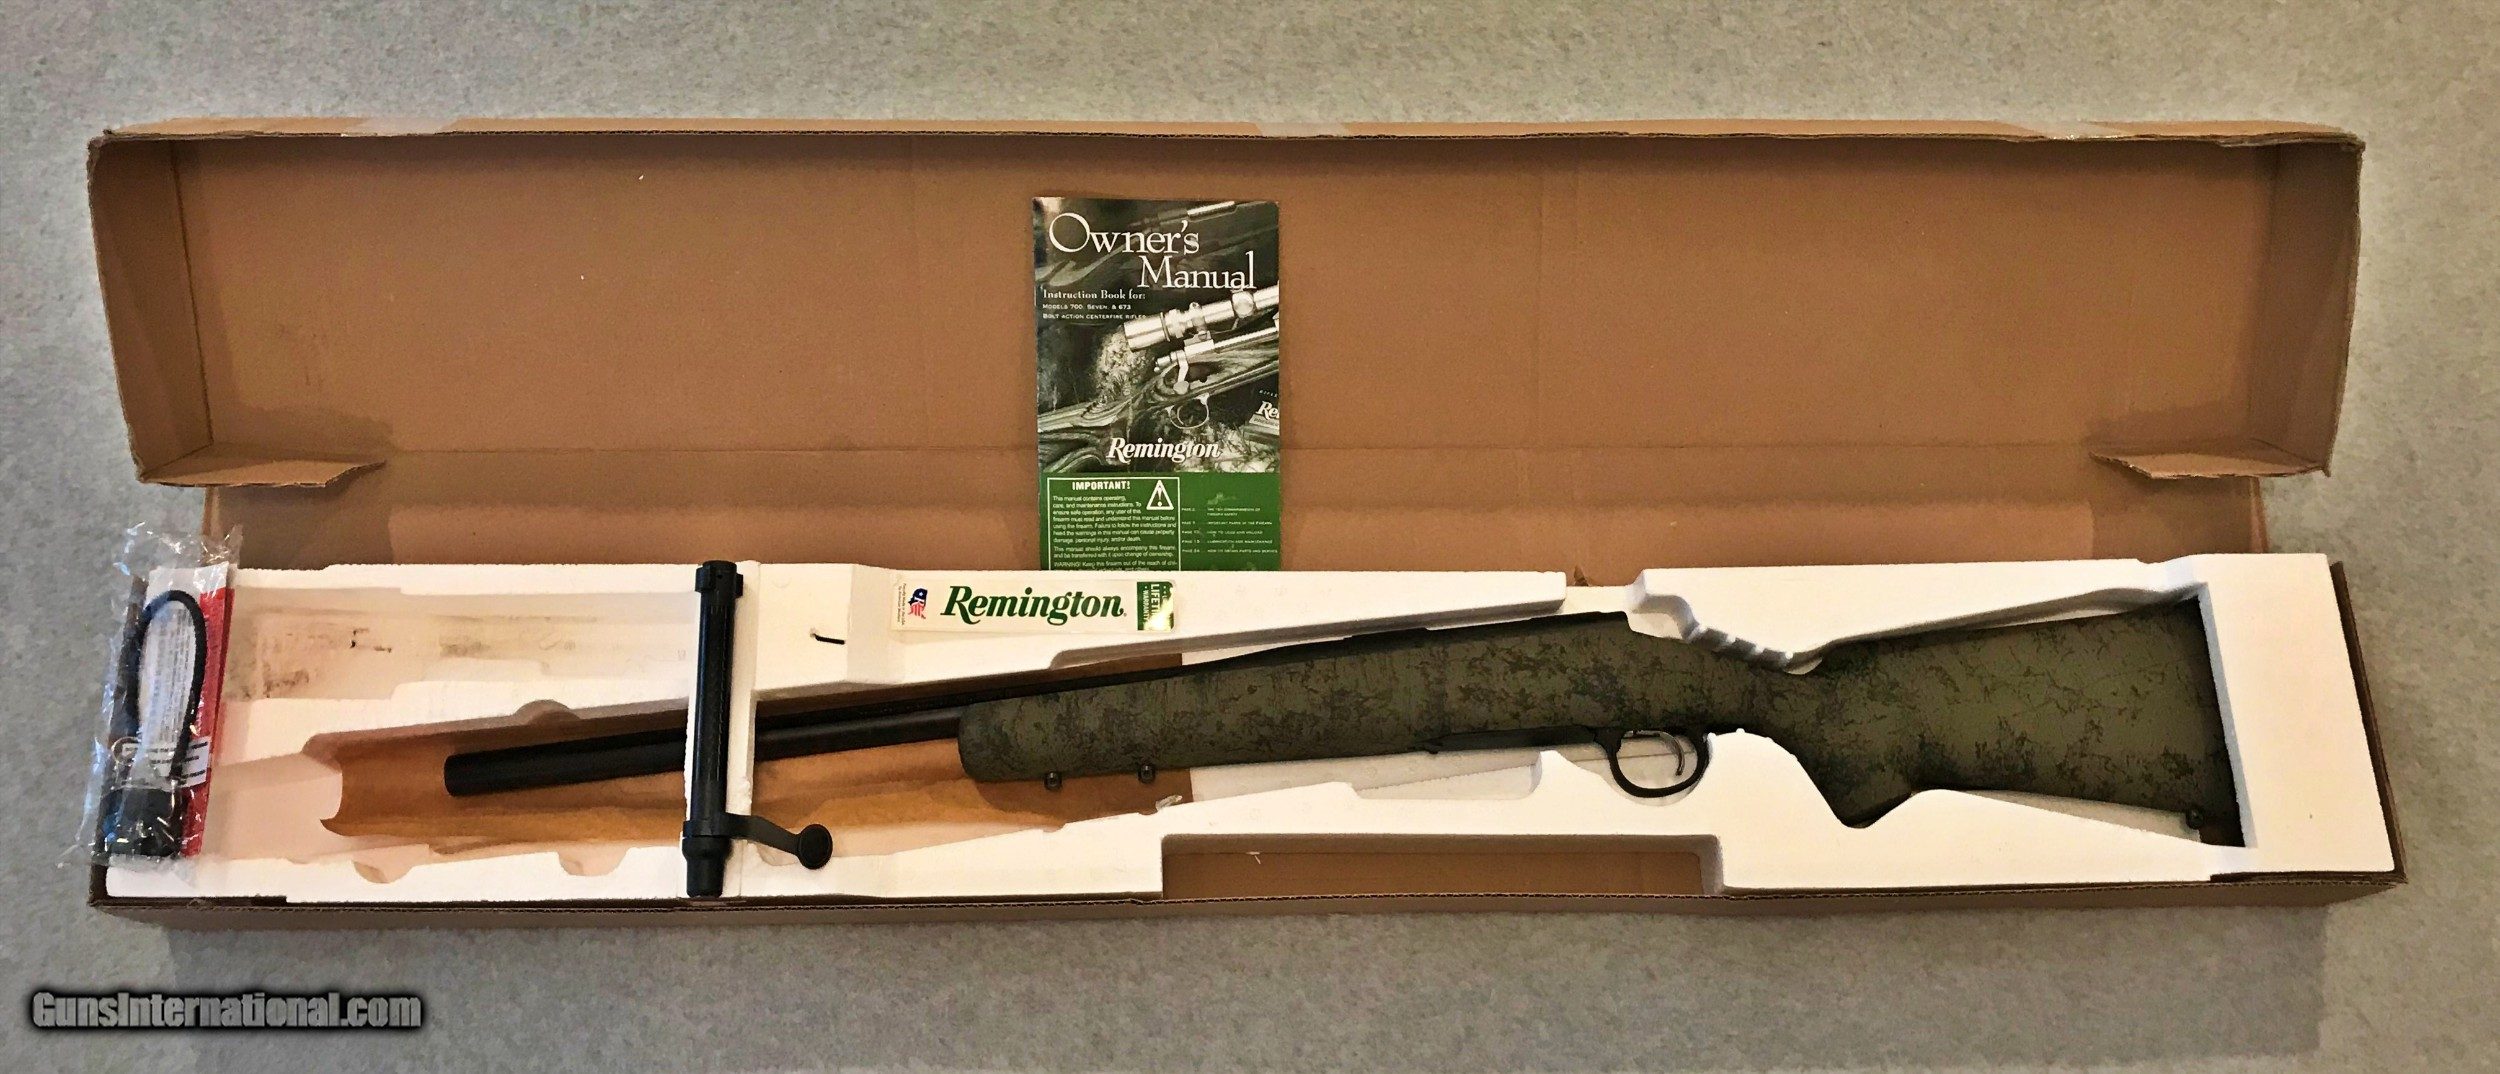 Gunlistings.org - Rifles New In Box Remington 700 Sps Tactical .308 2D1